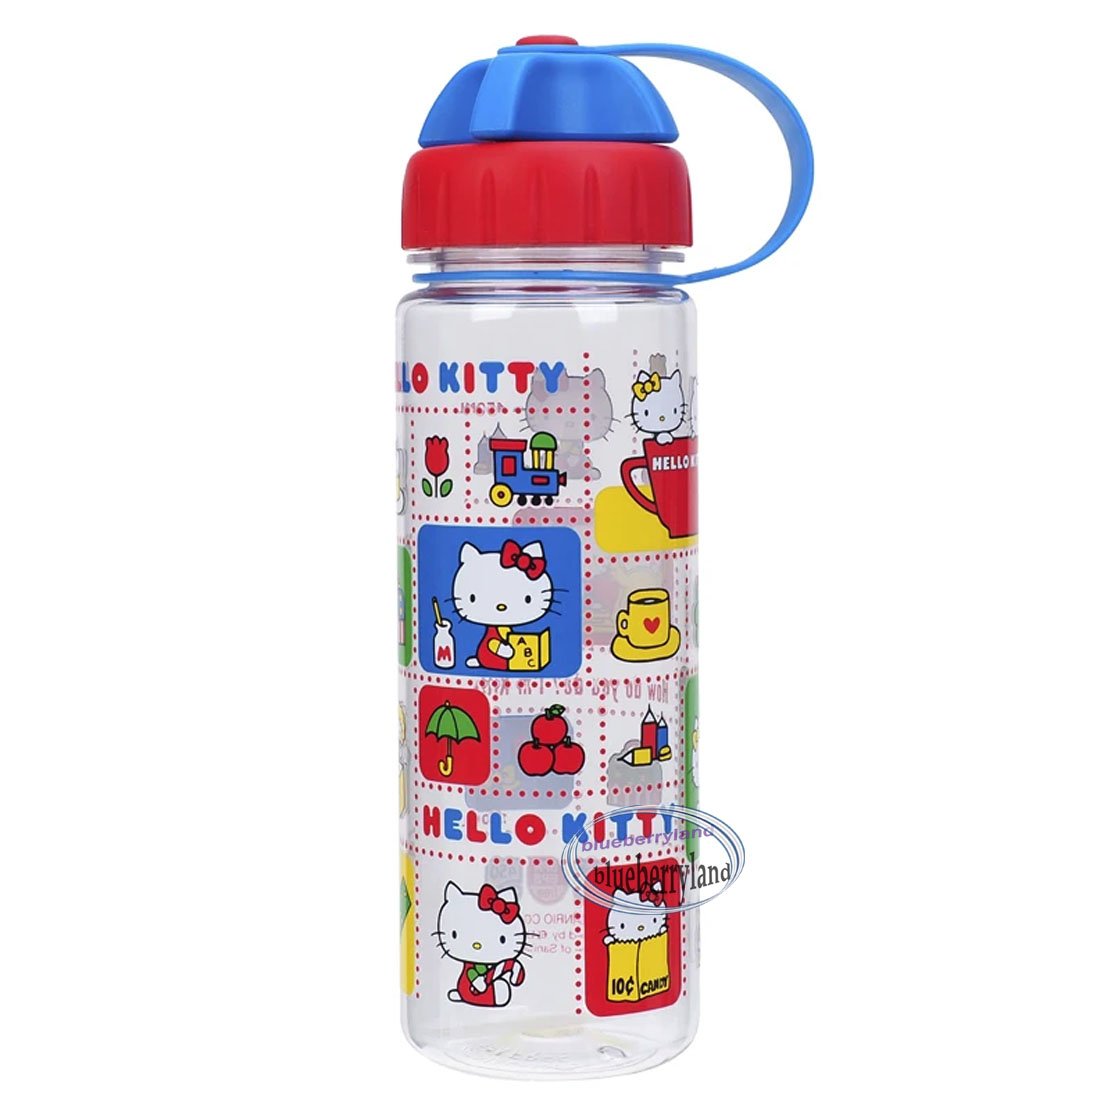 Sanrio Hello Kitty Water Bottle BPA Free drinkware container 450ml ...